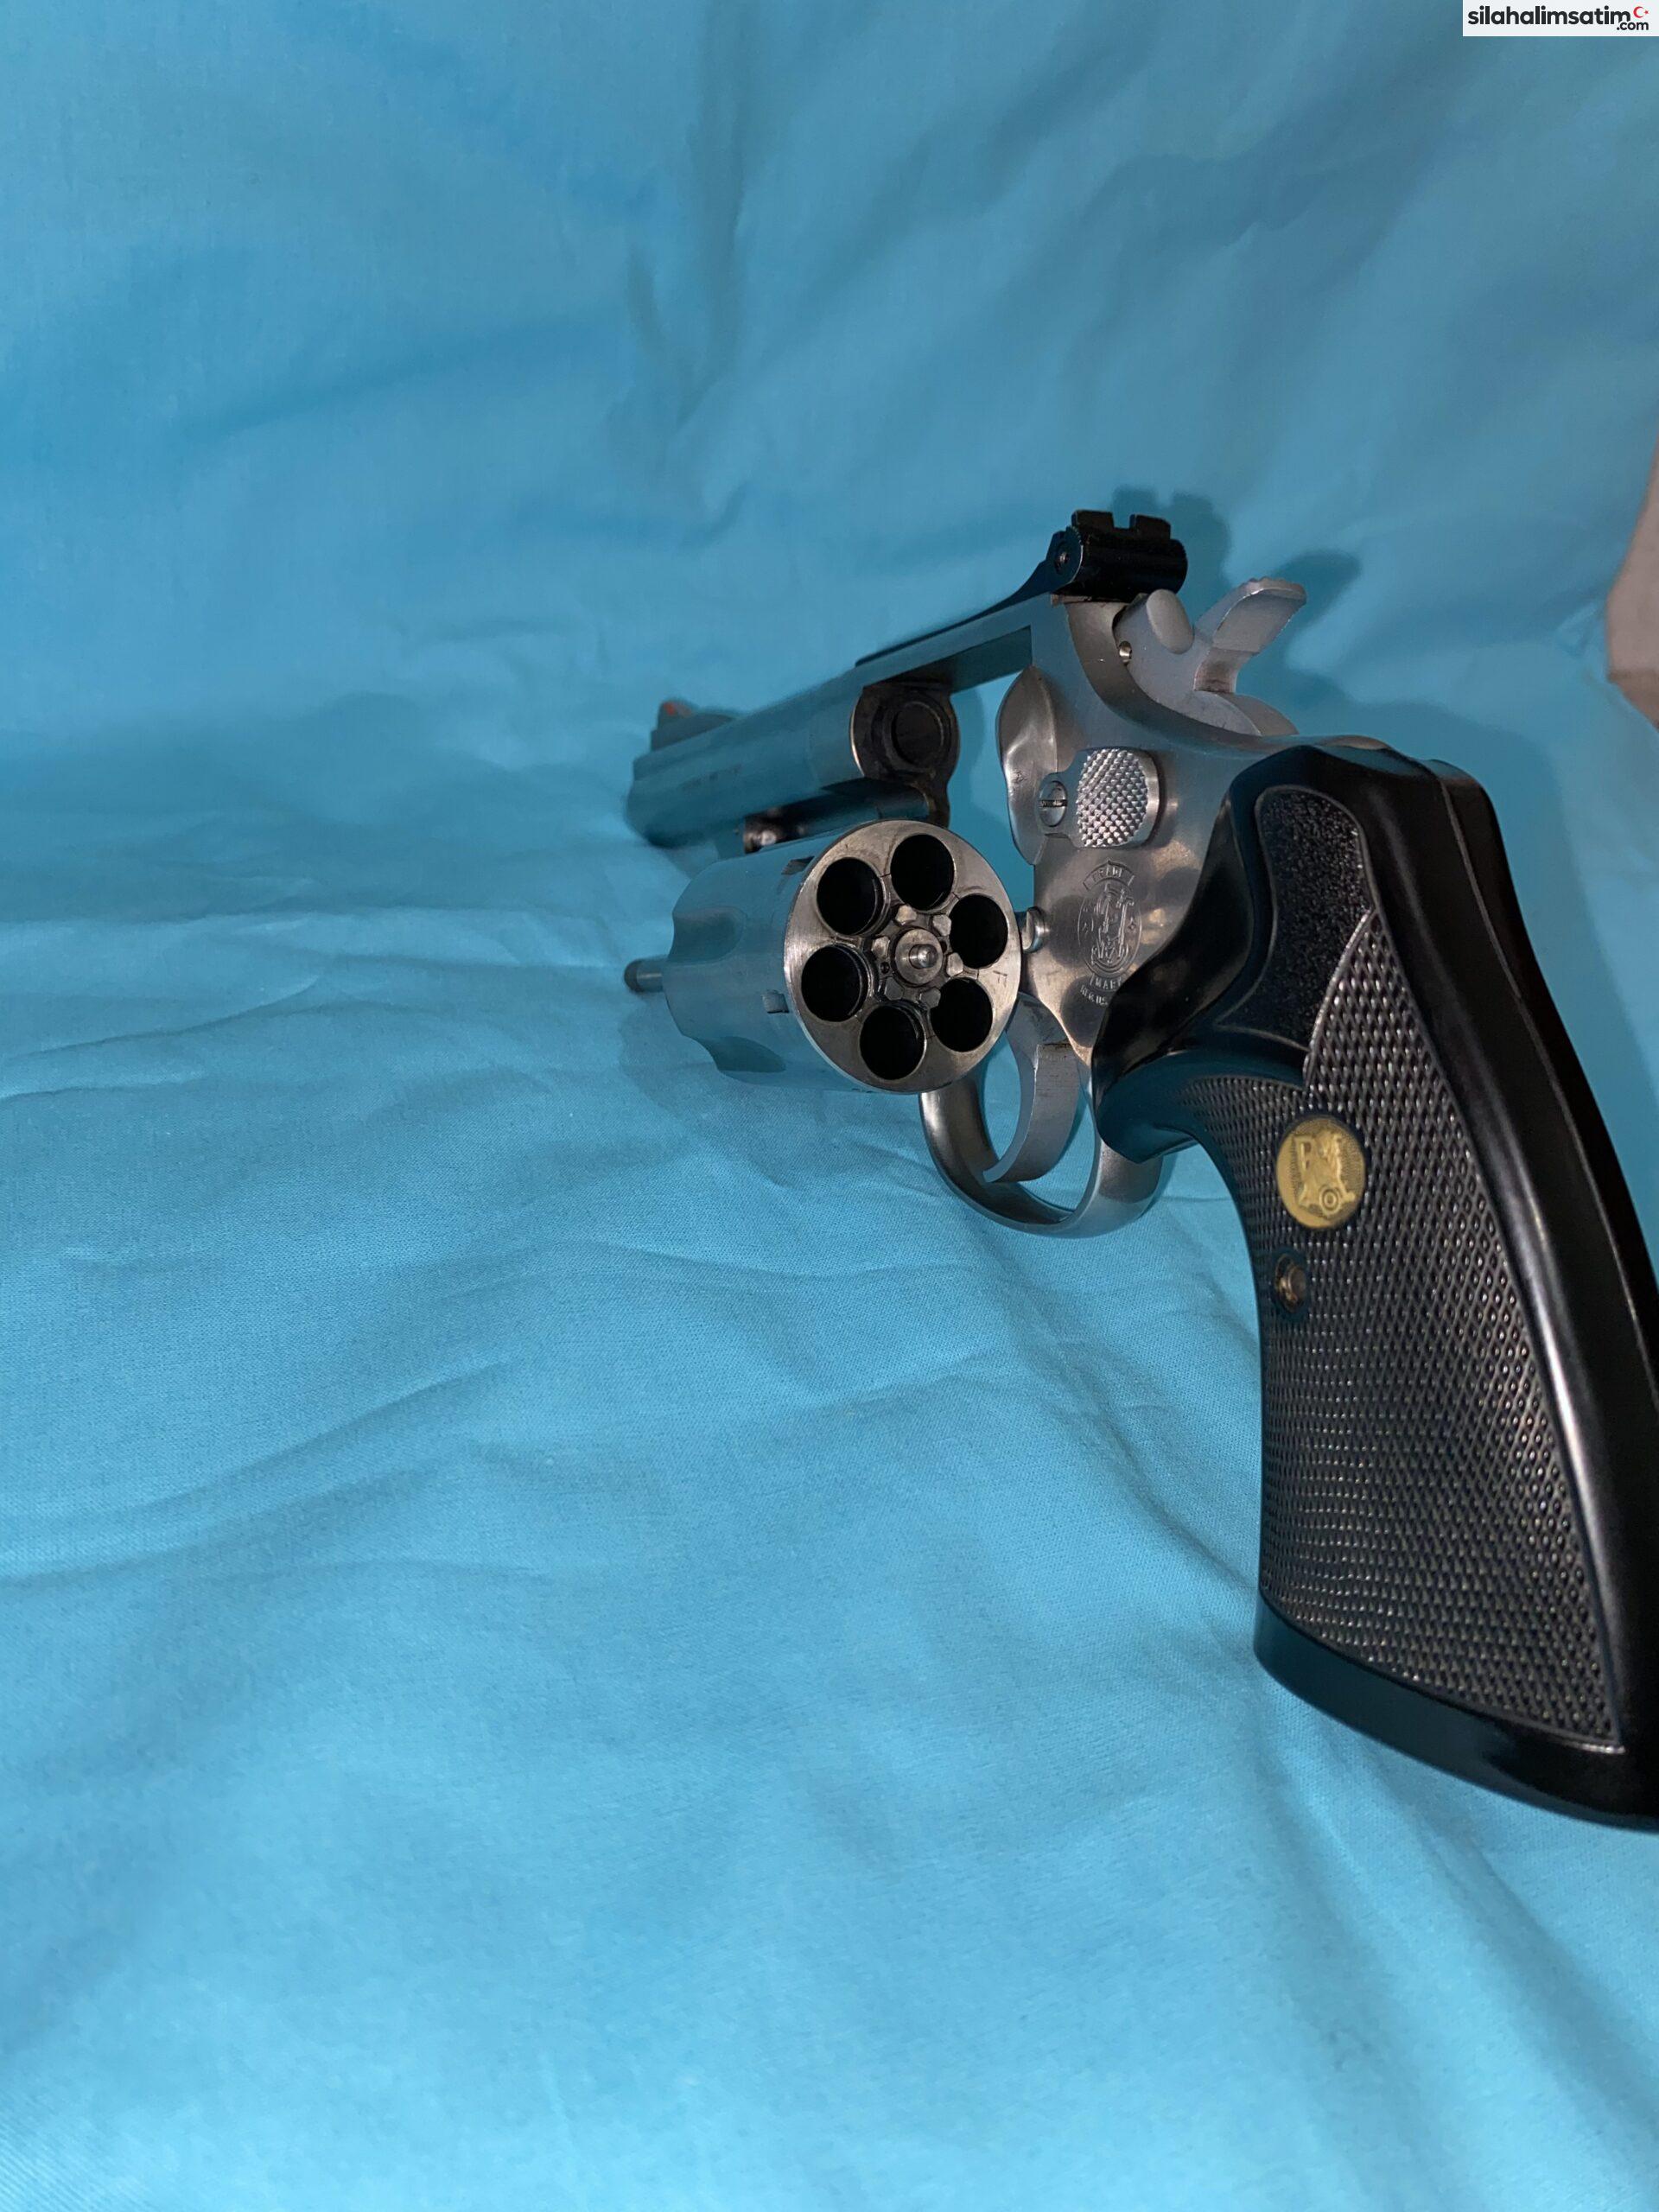 Emsalsiz Smith Wesson 357 Magnum